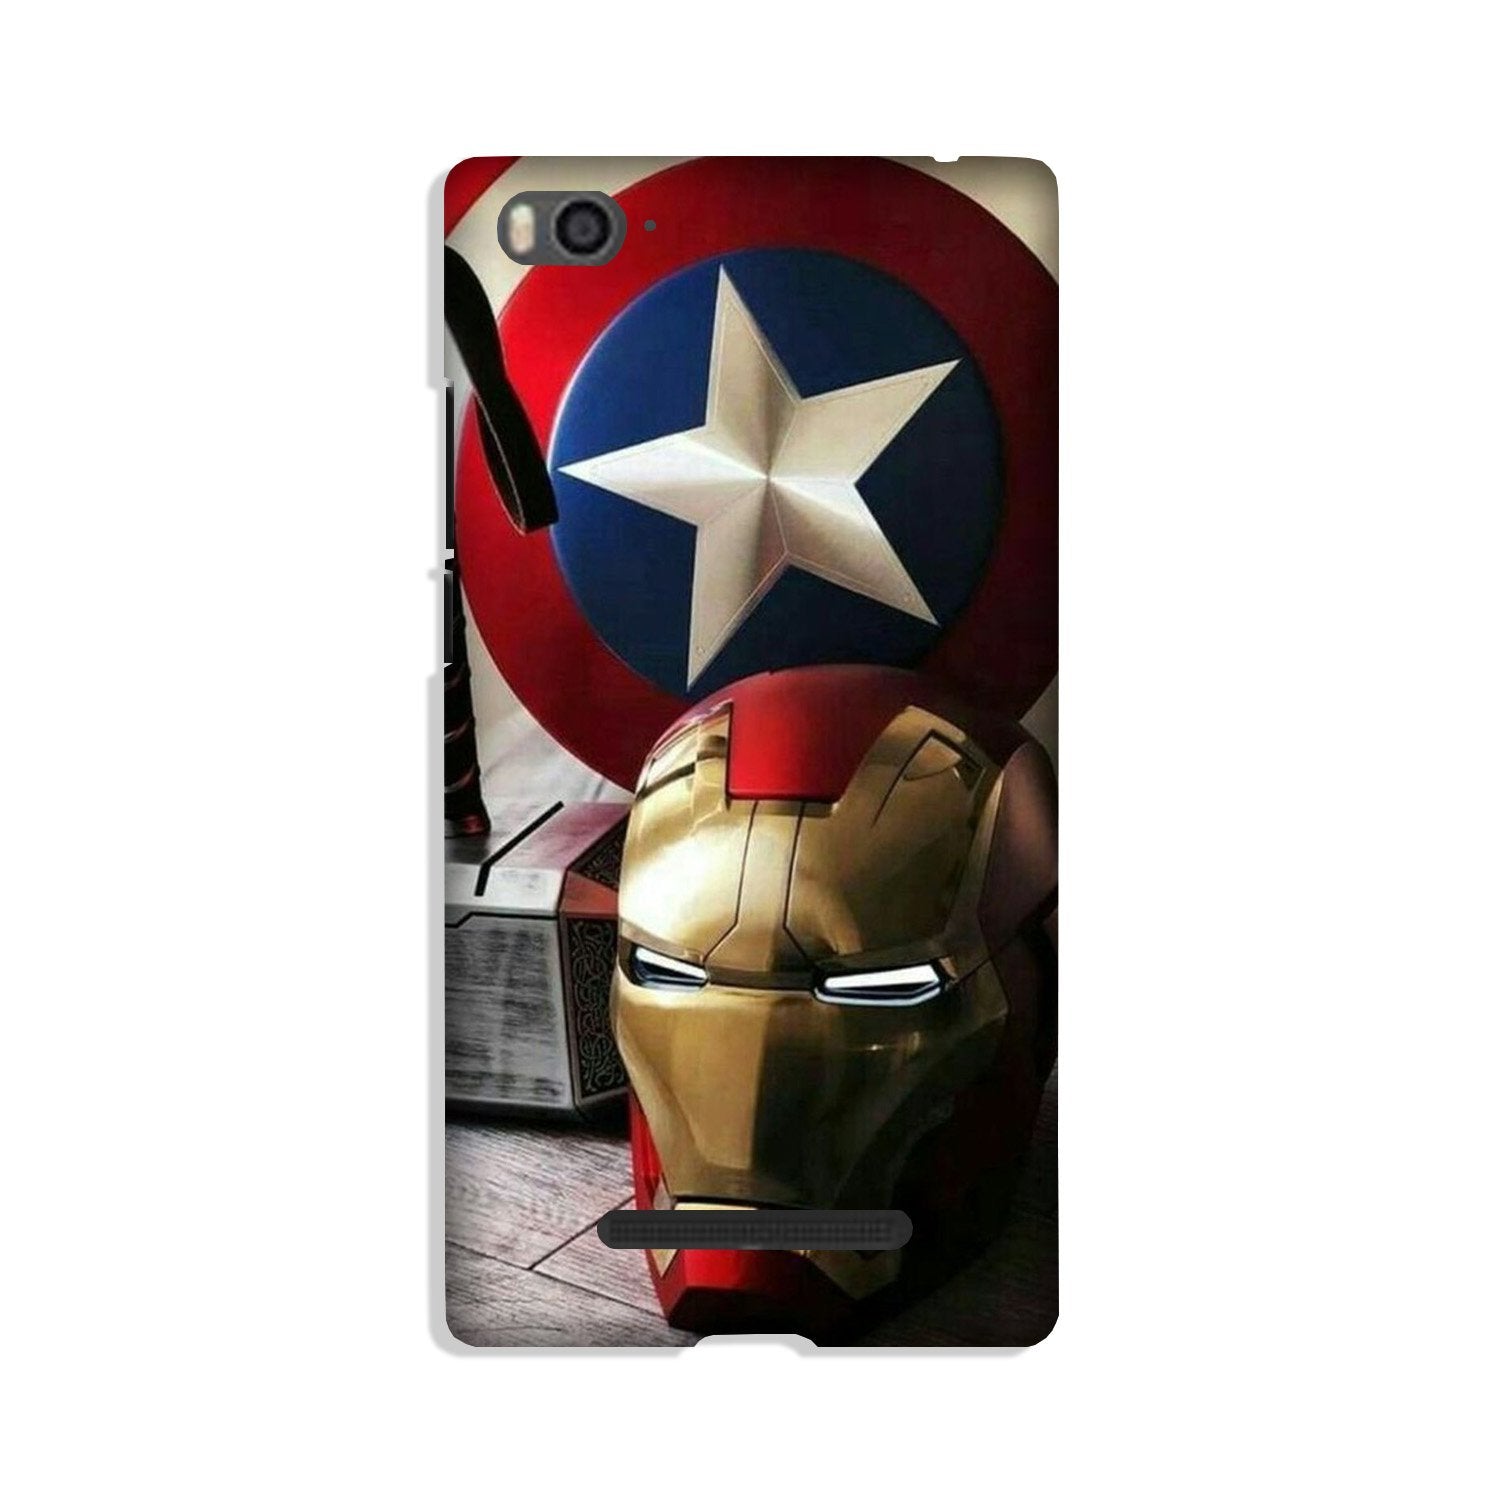 Ironman Captain America Case for Xiaomi Mi 4i (Design No. 254)